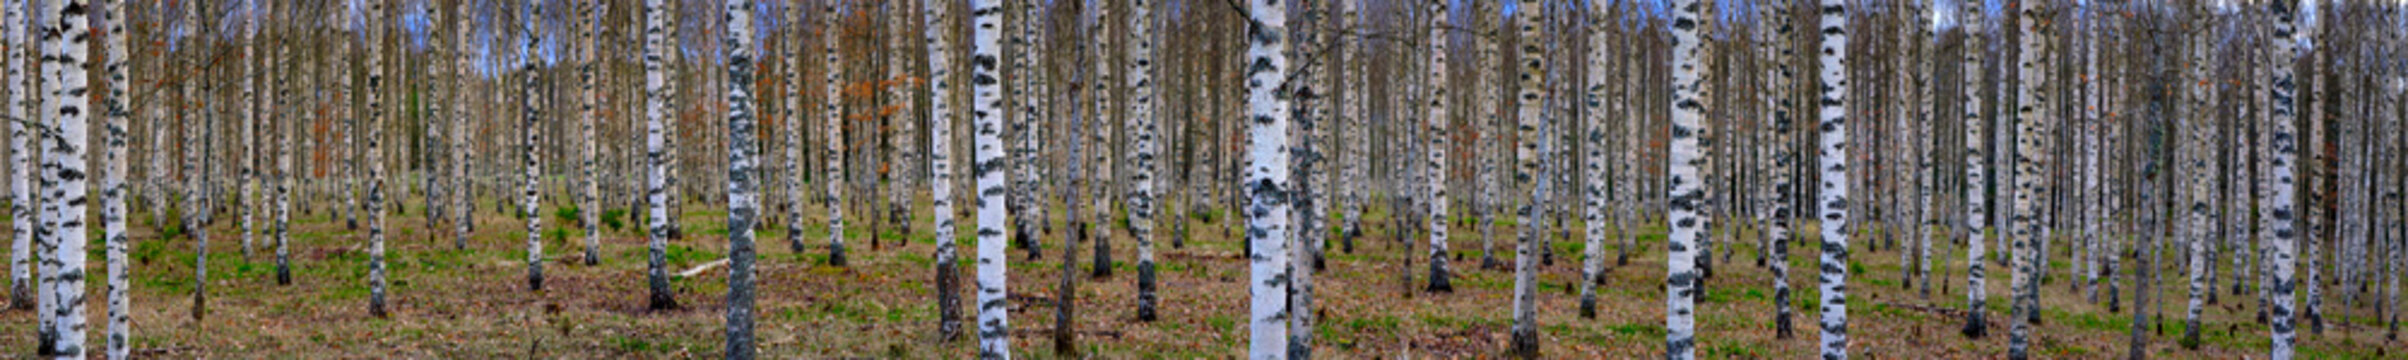 Fototapeta Panoramiczny widok lasu brzozowego